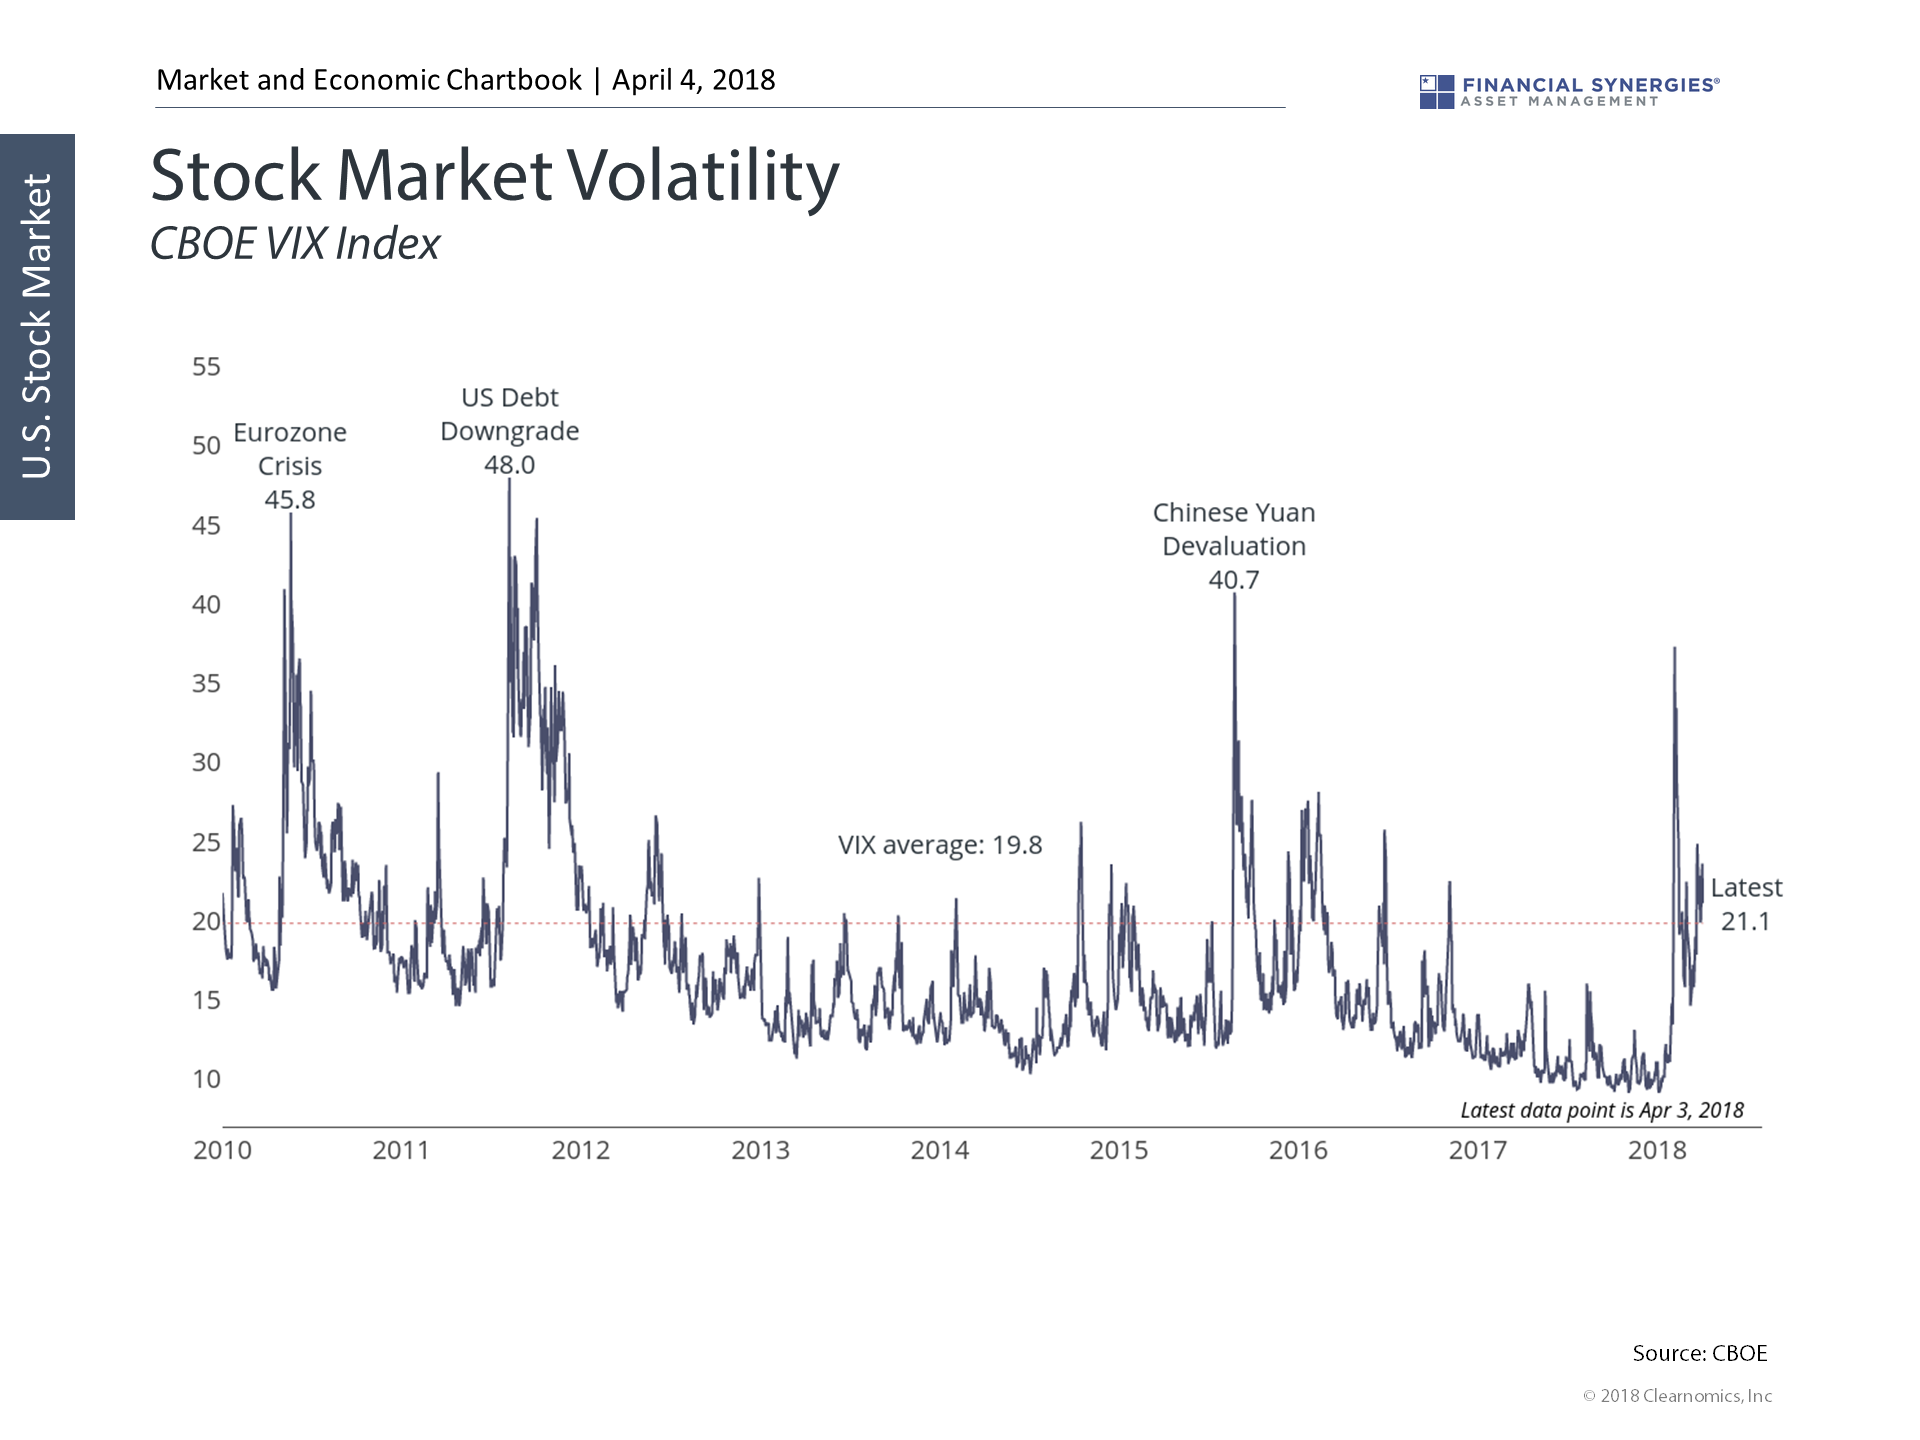 market volatility